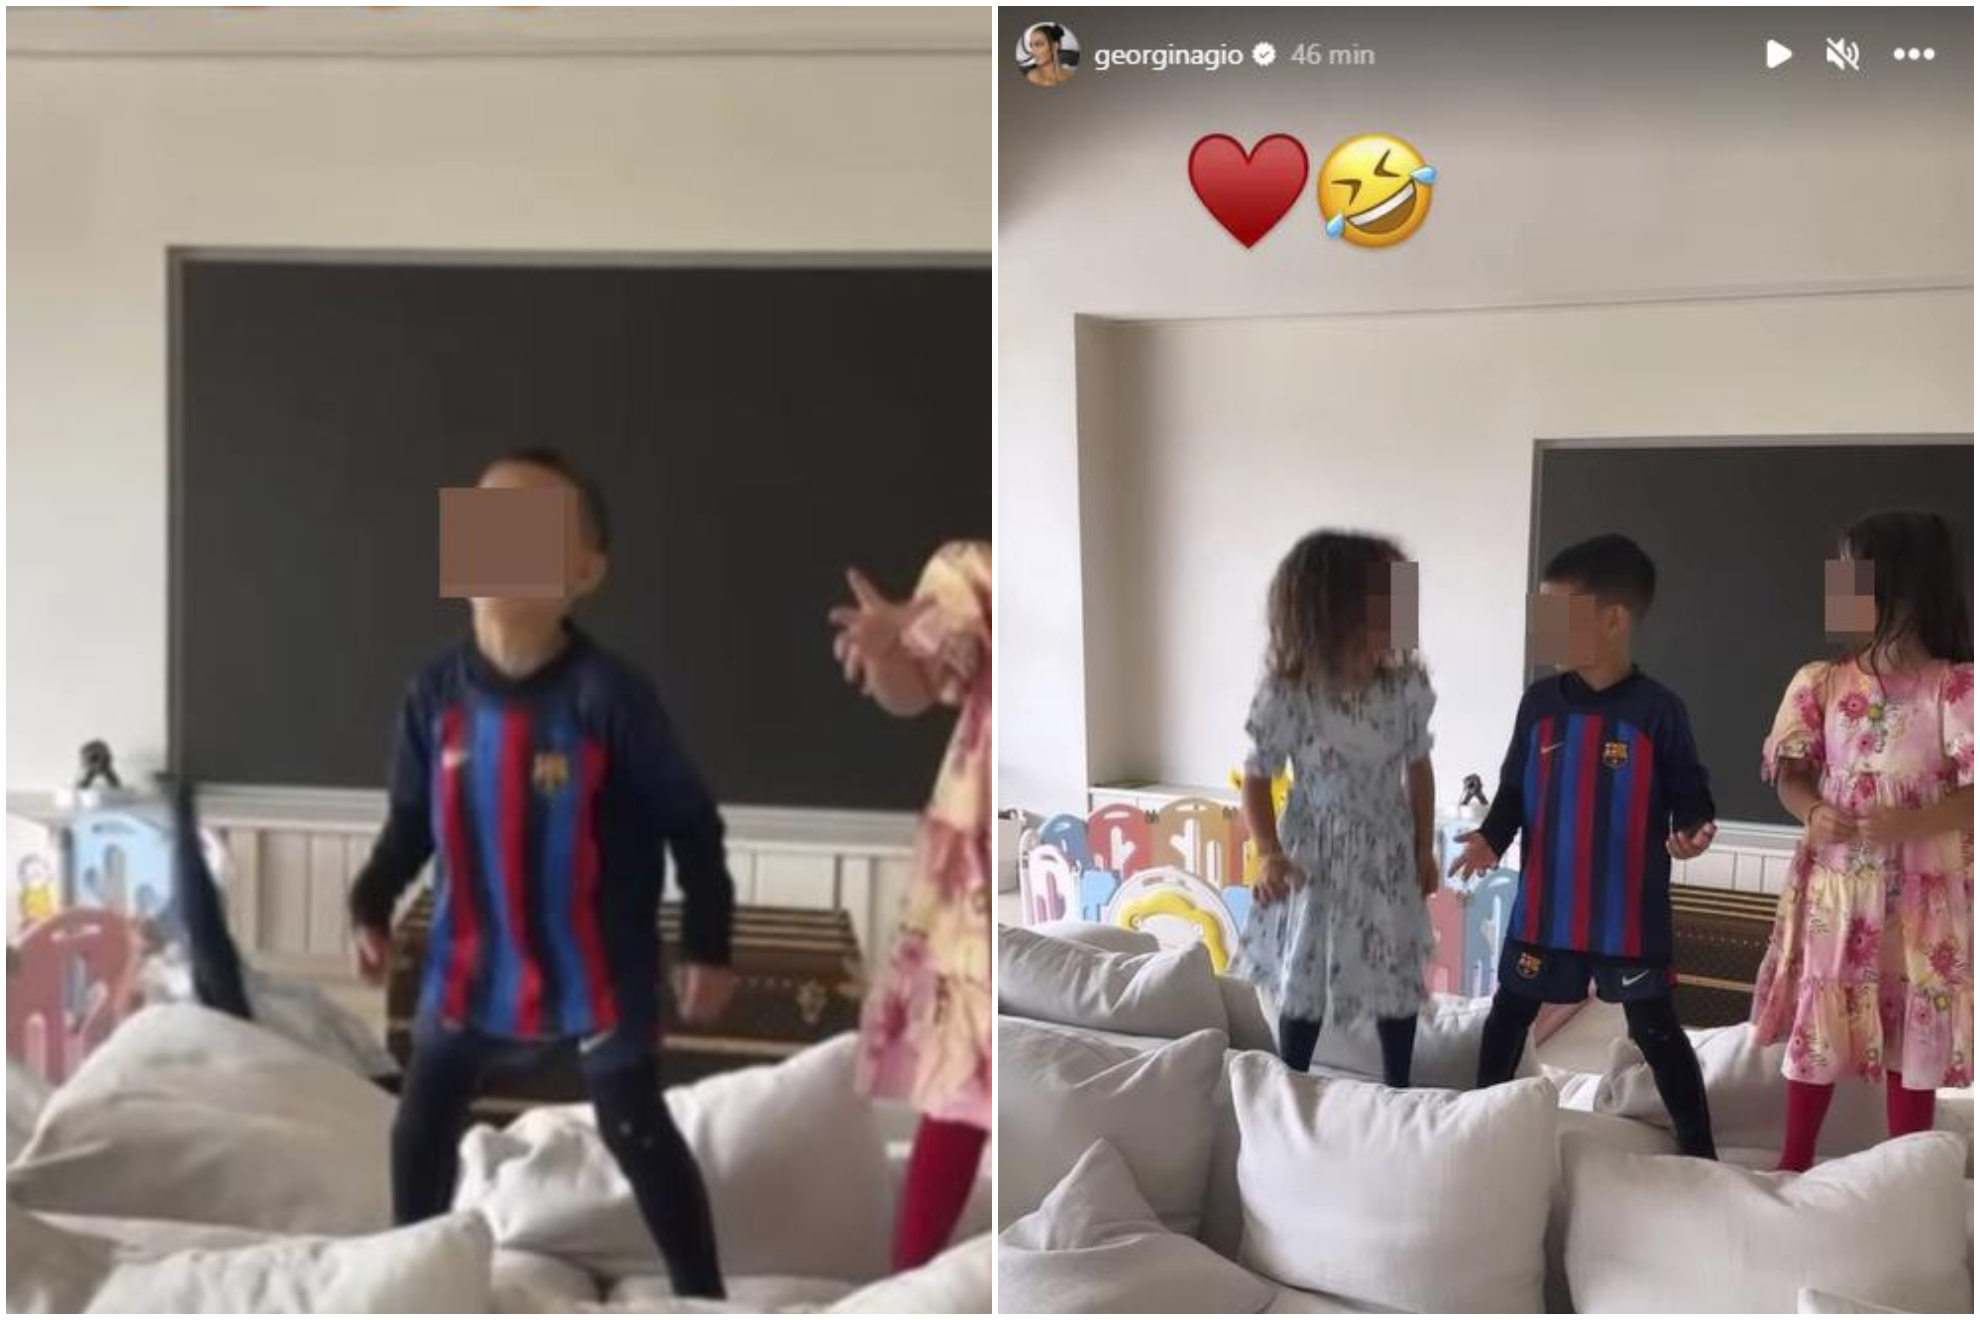 Cristiano Ronaldo and Georgina Rodriguez's son wears a Barcelona shirt